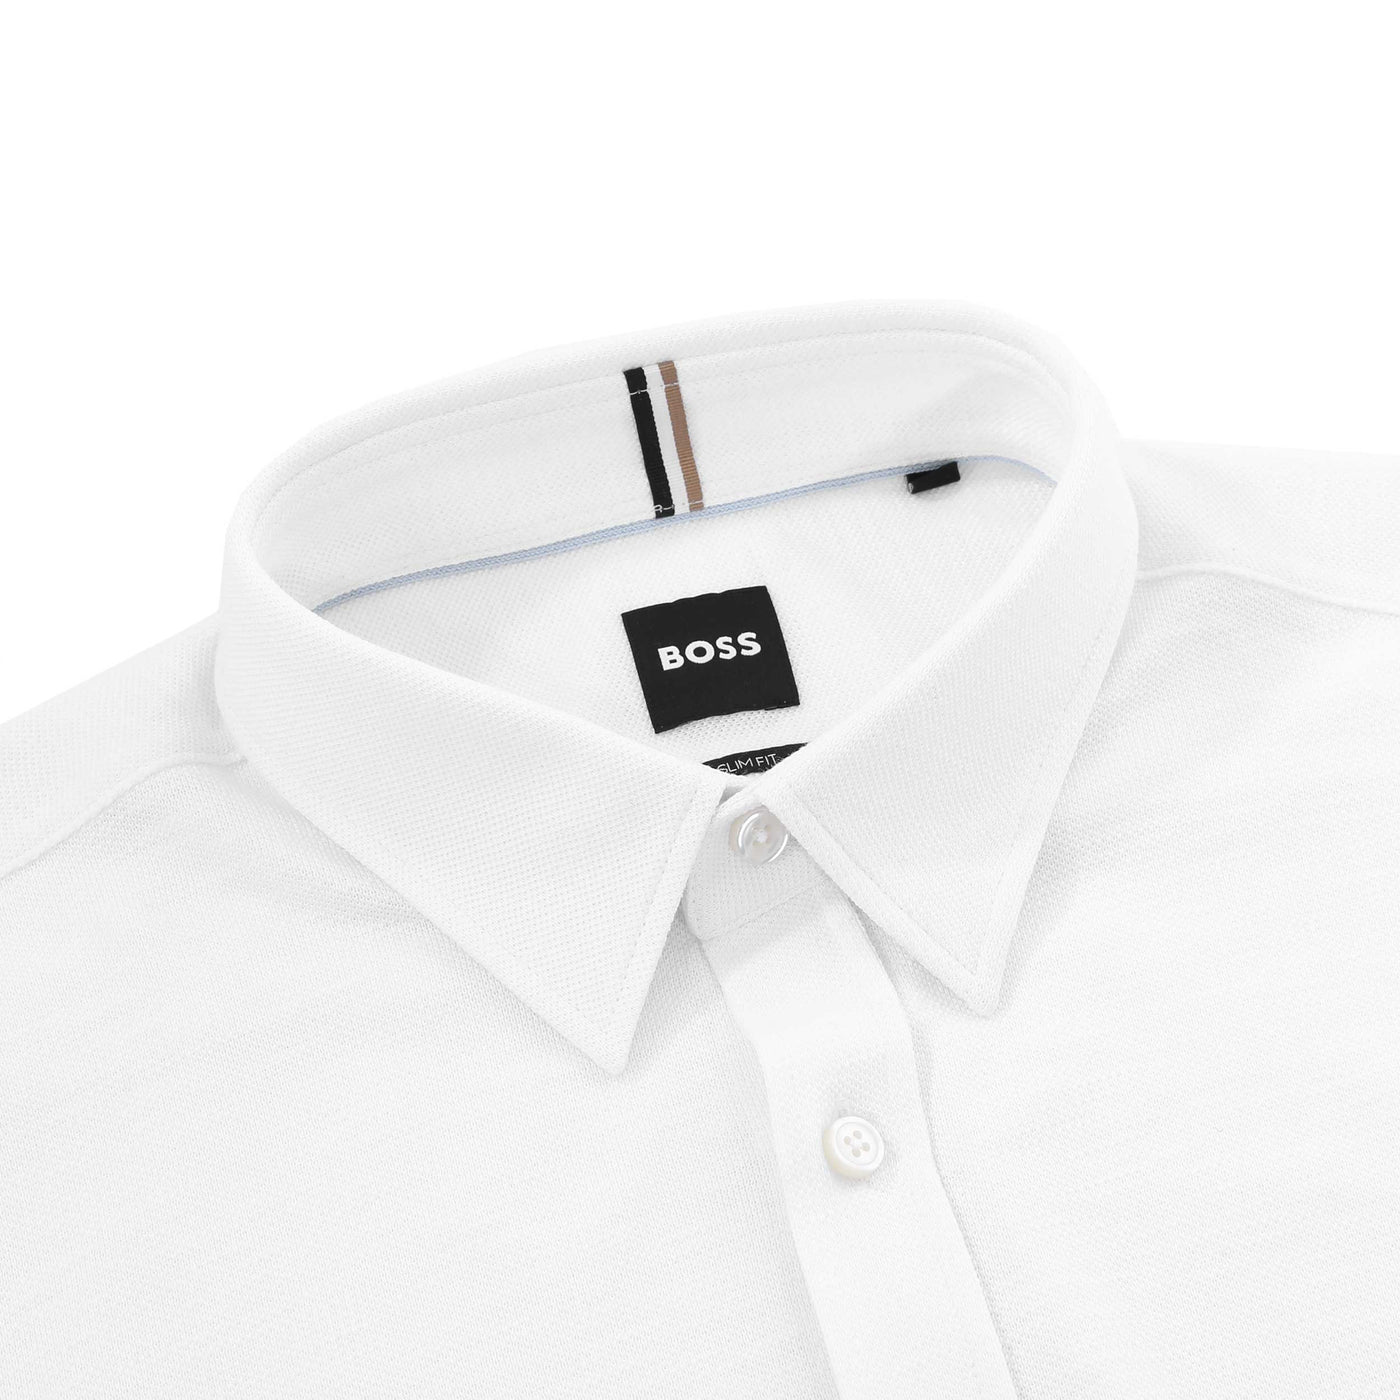 BOSS S Roan Kent SH C1 233 Shirt in White Collar